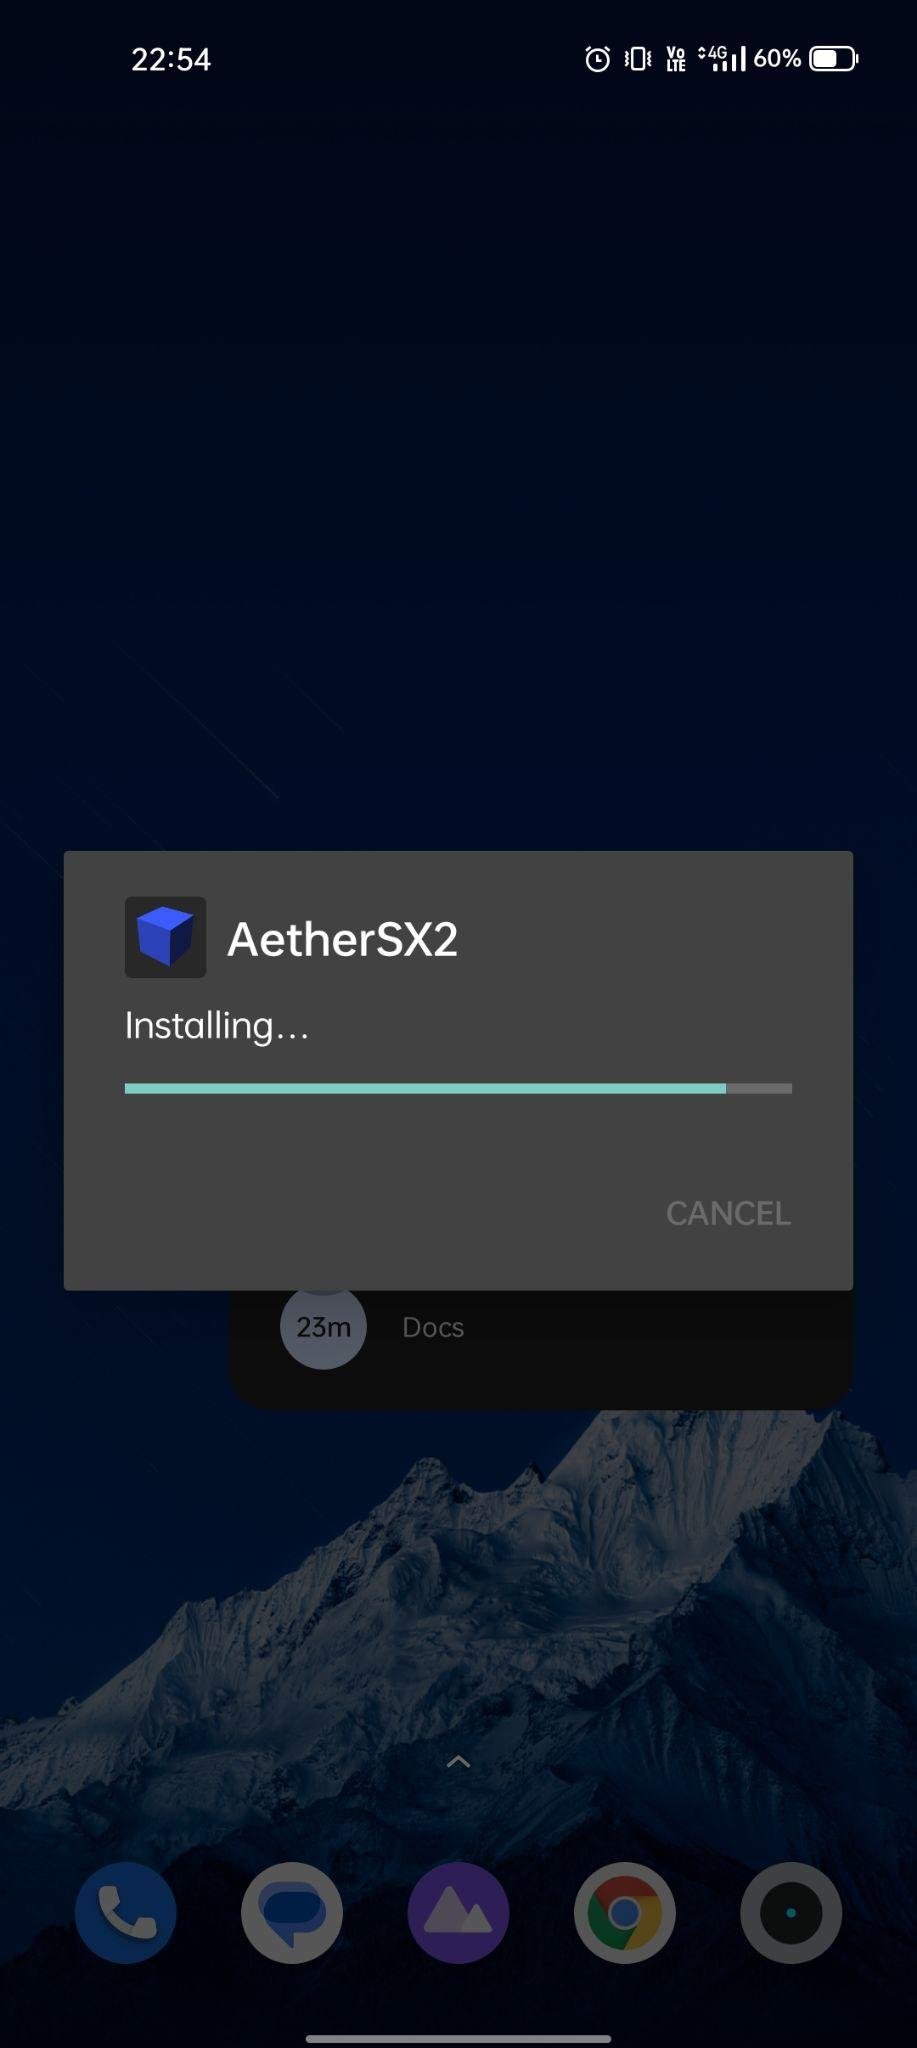 AetherSX2 apk installing